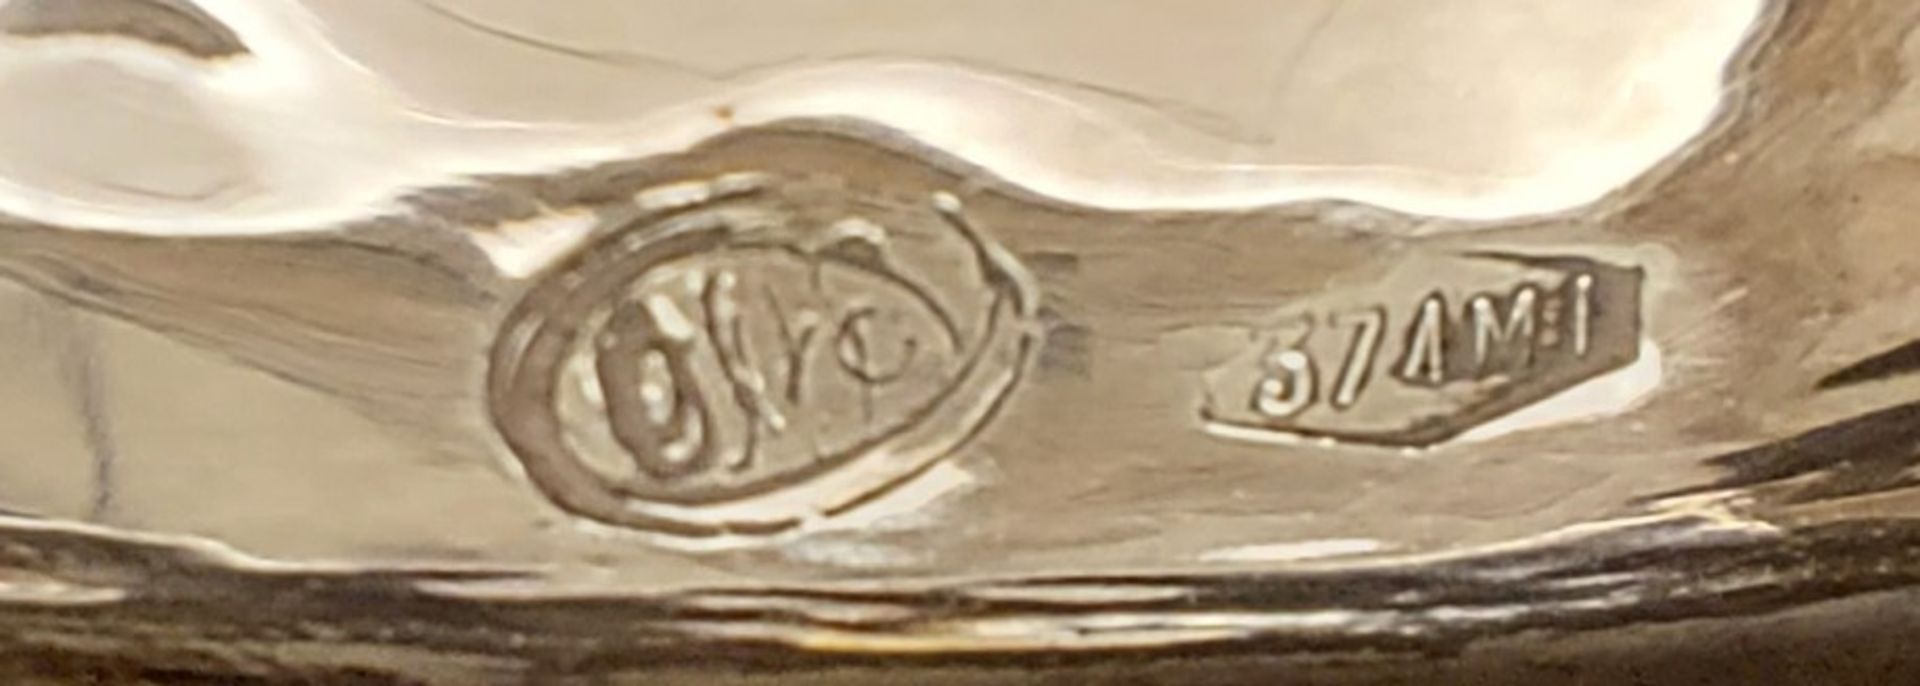 Grande centrotavola a 8 punte in argento cesellato con punzone 347Mi Arioli Piero Milano - Image 8 of 8